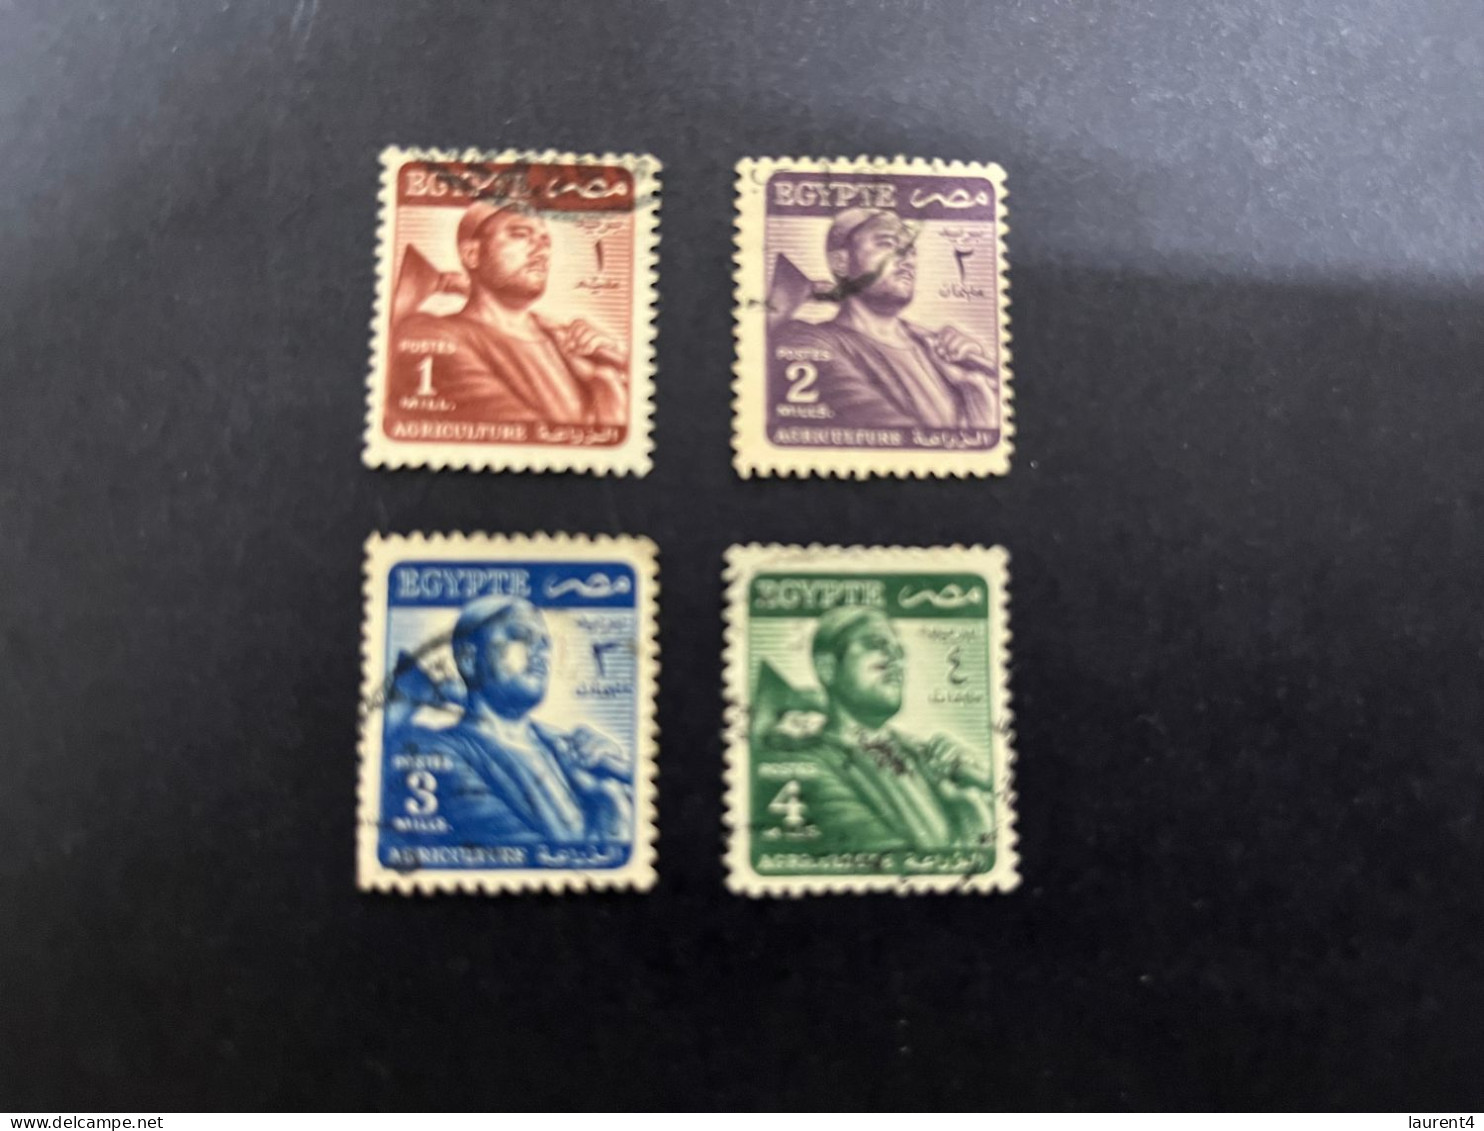 8-1-2024 (stamp) 4 Older Cancelled Stamp From Egypt (military) - Gebruikt